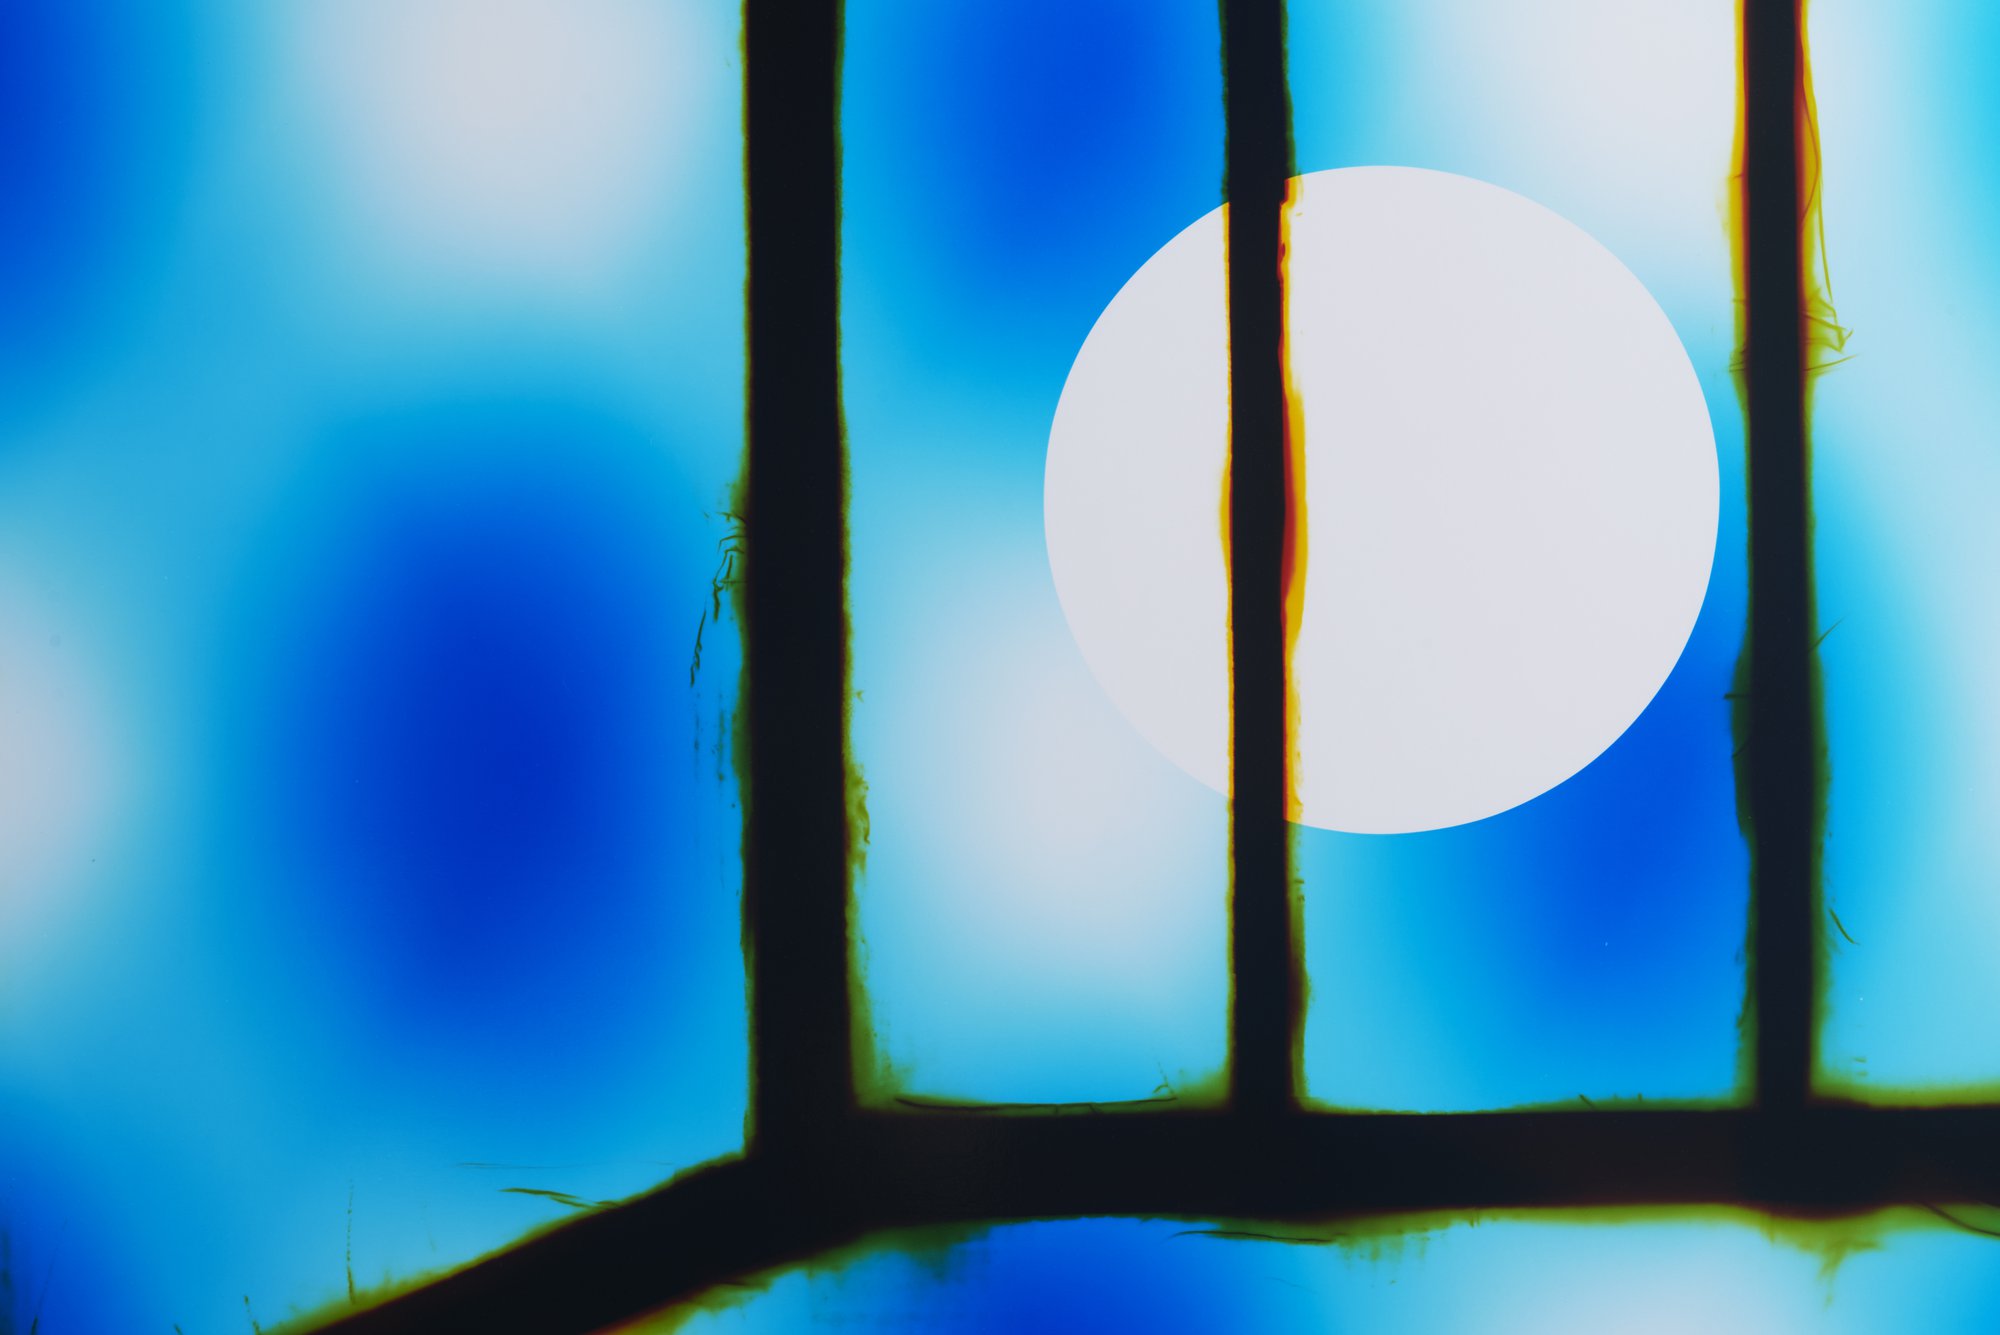 Hadi Fallahpisheh, Prison of Mind (Blue Corner), detail, light drawing on photosensitive paper, 106 x 185 x 5 cm (41 3/4 x 72 7/8 x 2 in), 2021